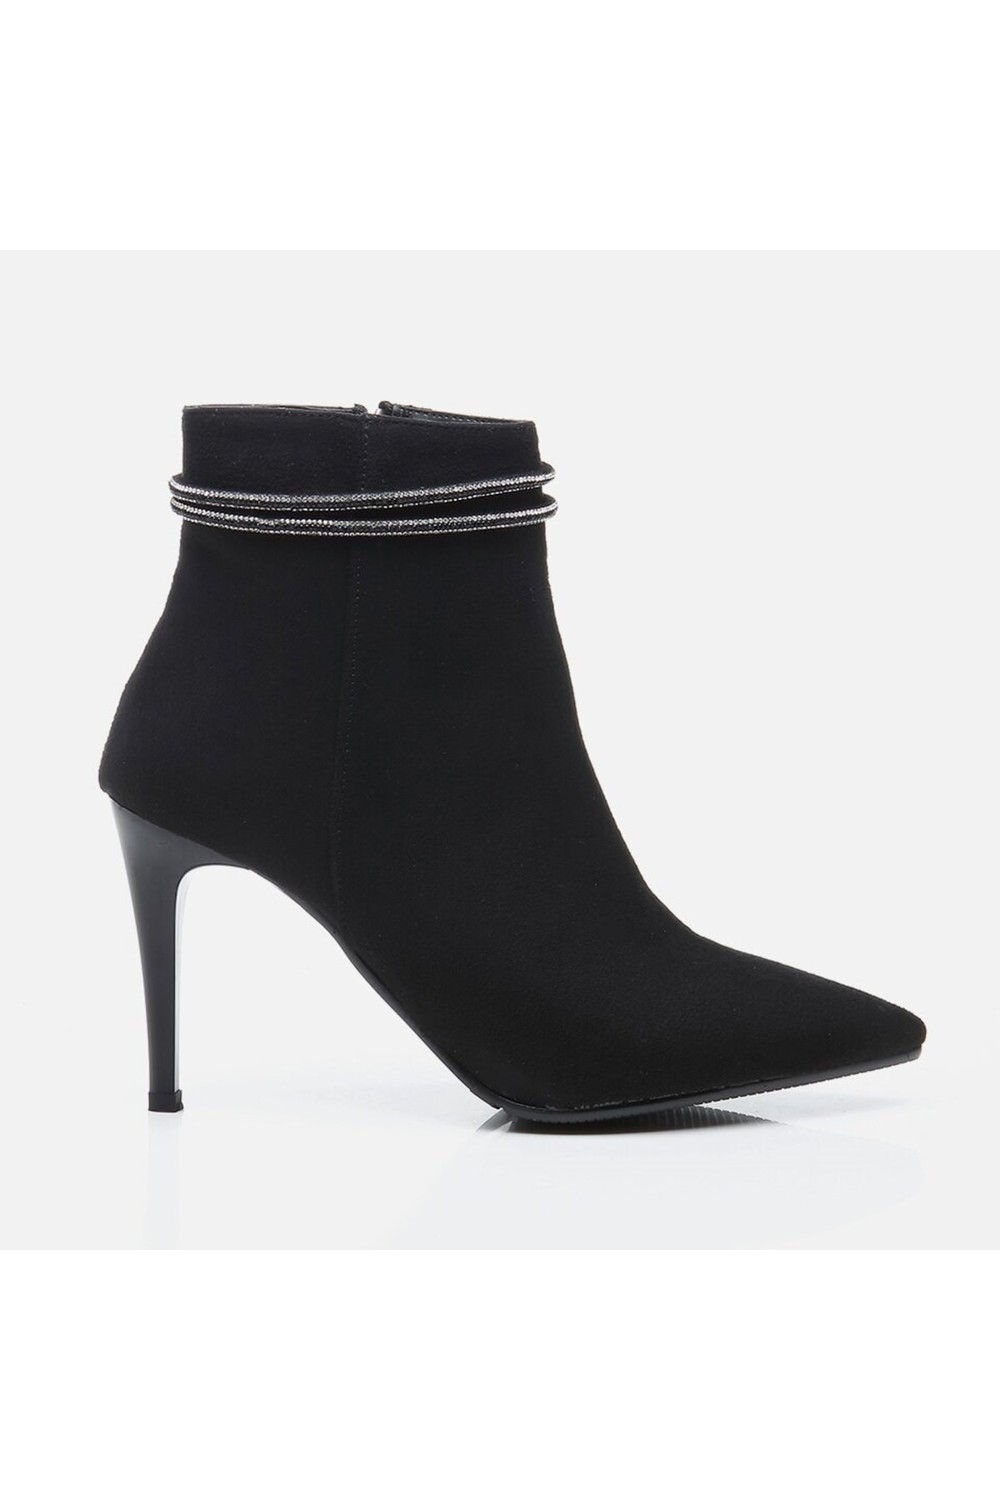 Yaya by Hotiç Ankle Boots - Black - Stiletto Heels